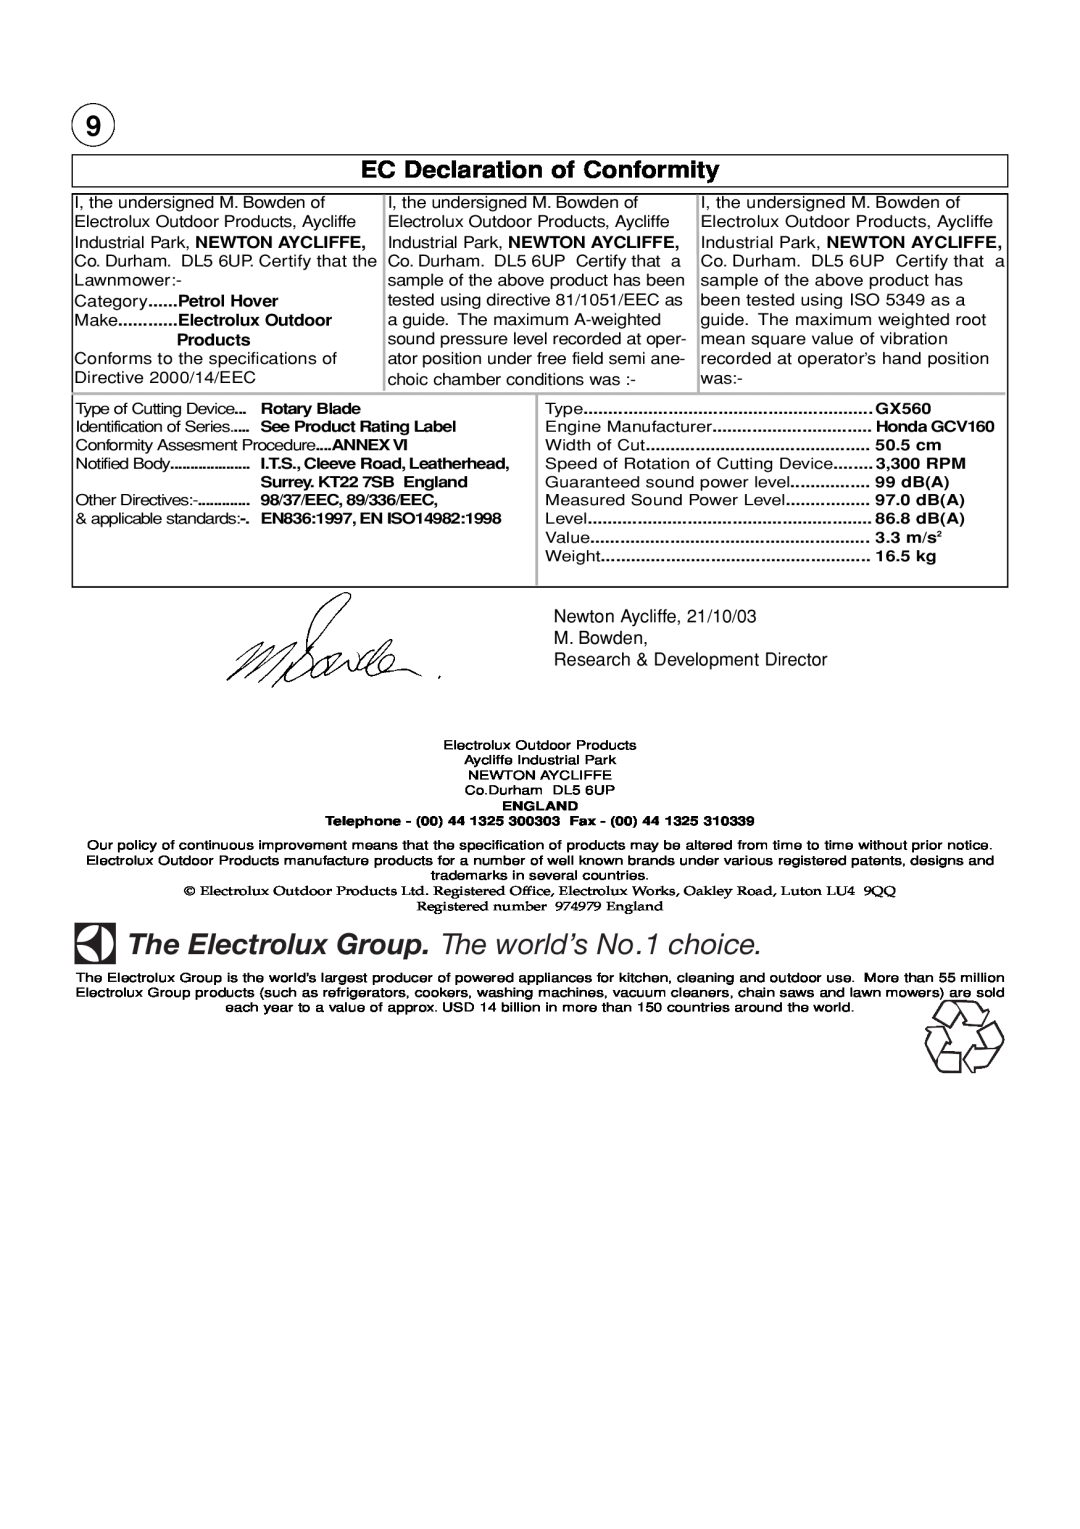 Husqvarna GX560 manual The Electrolux Group. The world’s No.1 choice, EC Declaration of Conformity 